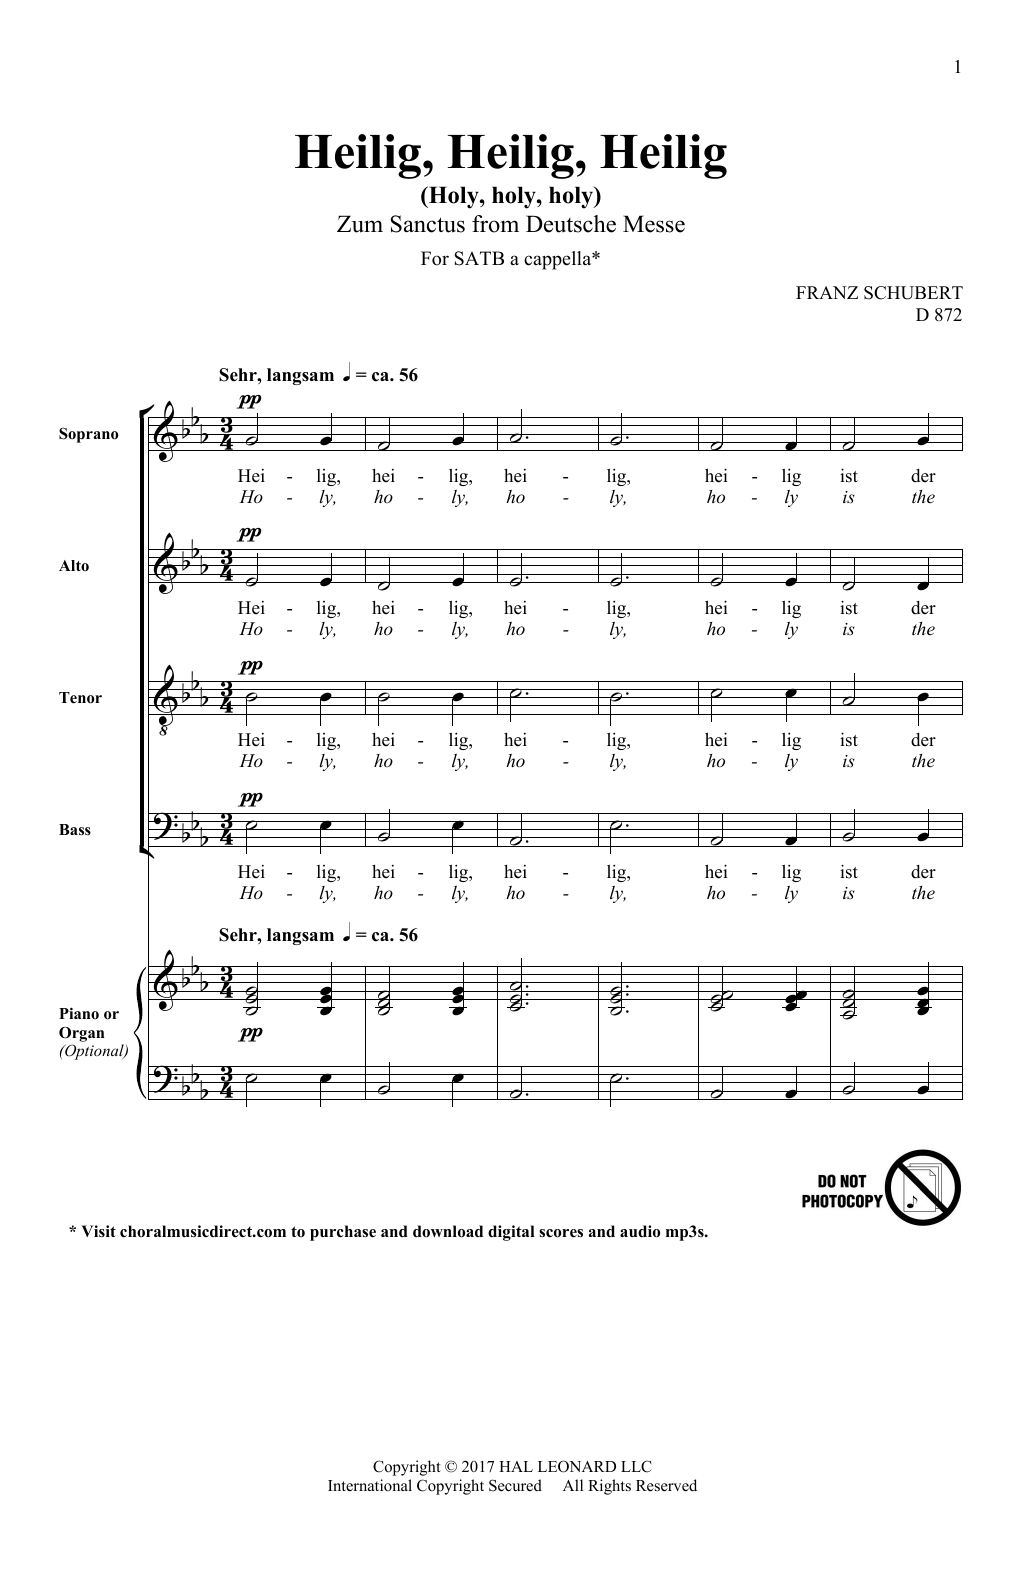 Franz Schubert Heilig, Heilig, Heilig (Holy, Holy, Holy) Sheet Music Notes & Chords for SATB Choir - Download or Print PDF